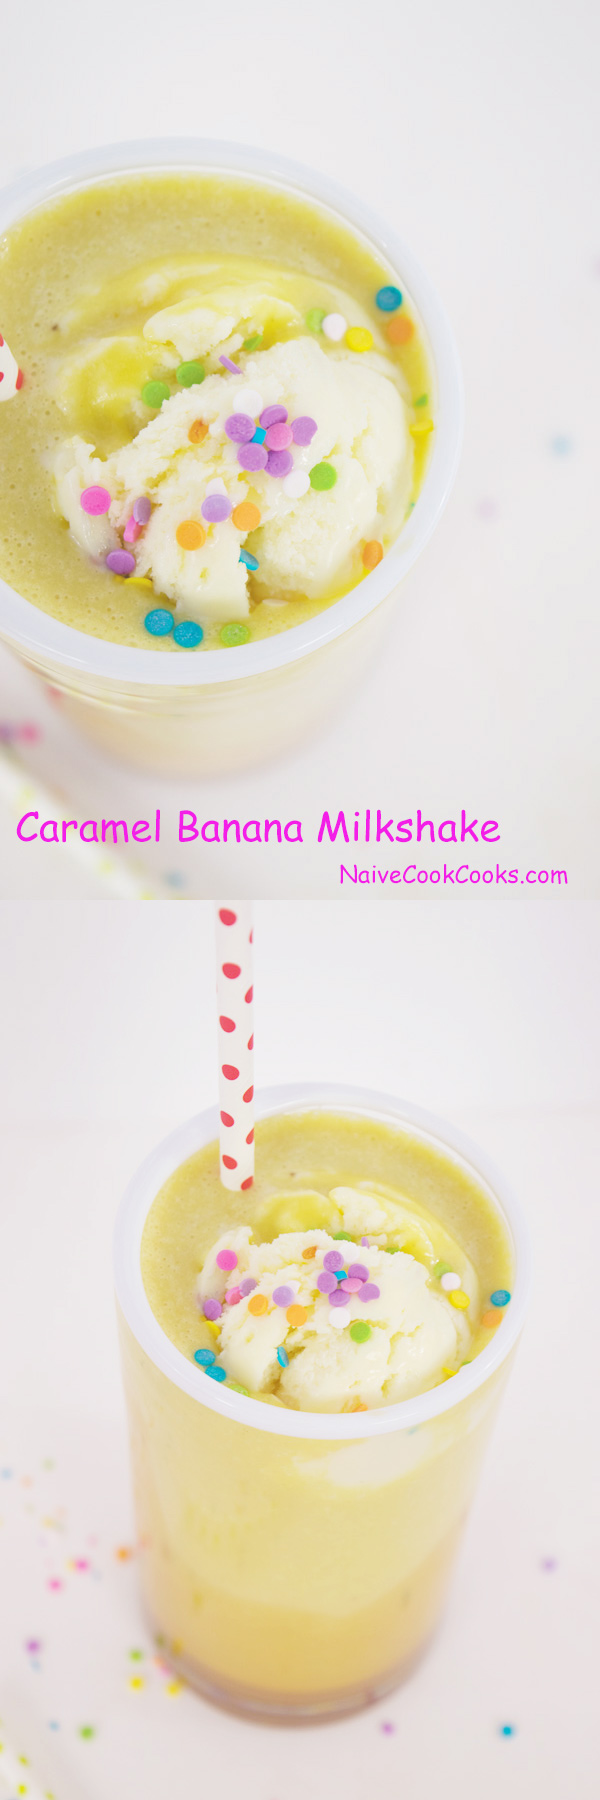 banana milkshake with caramel syrup